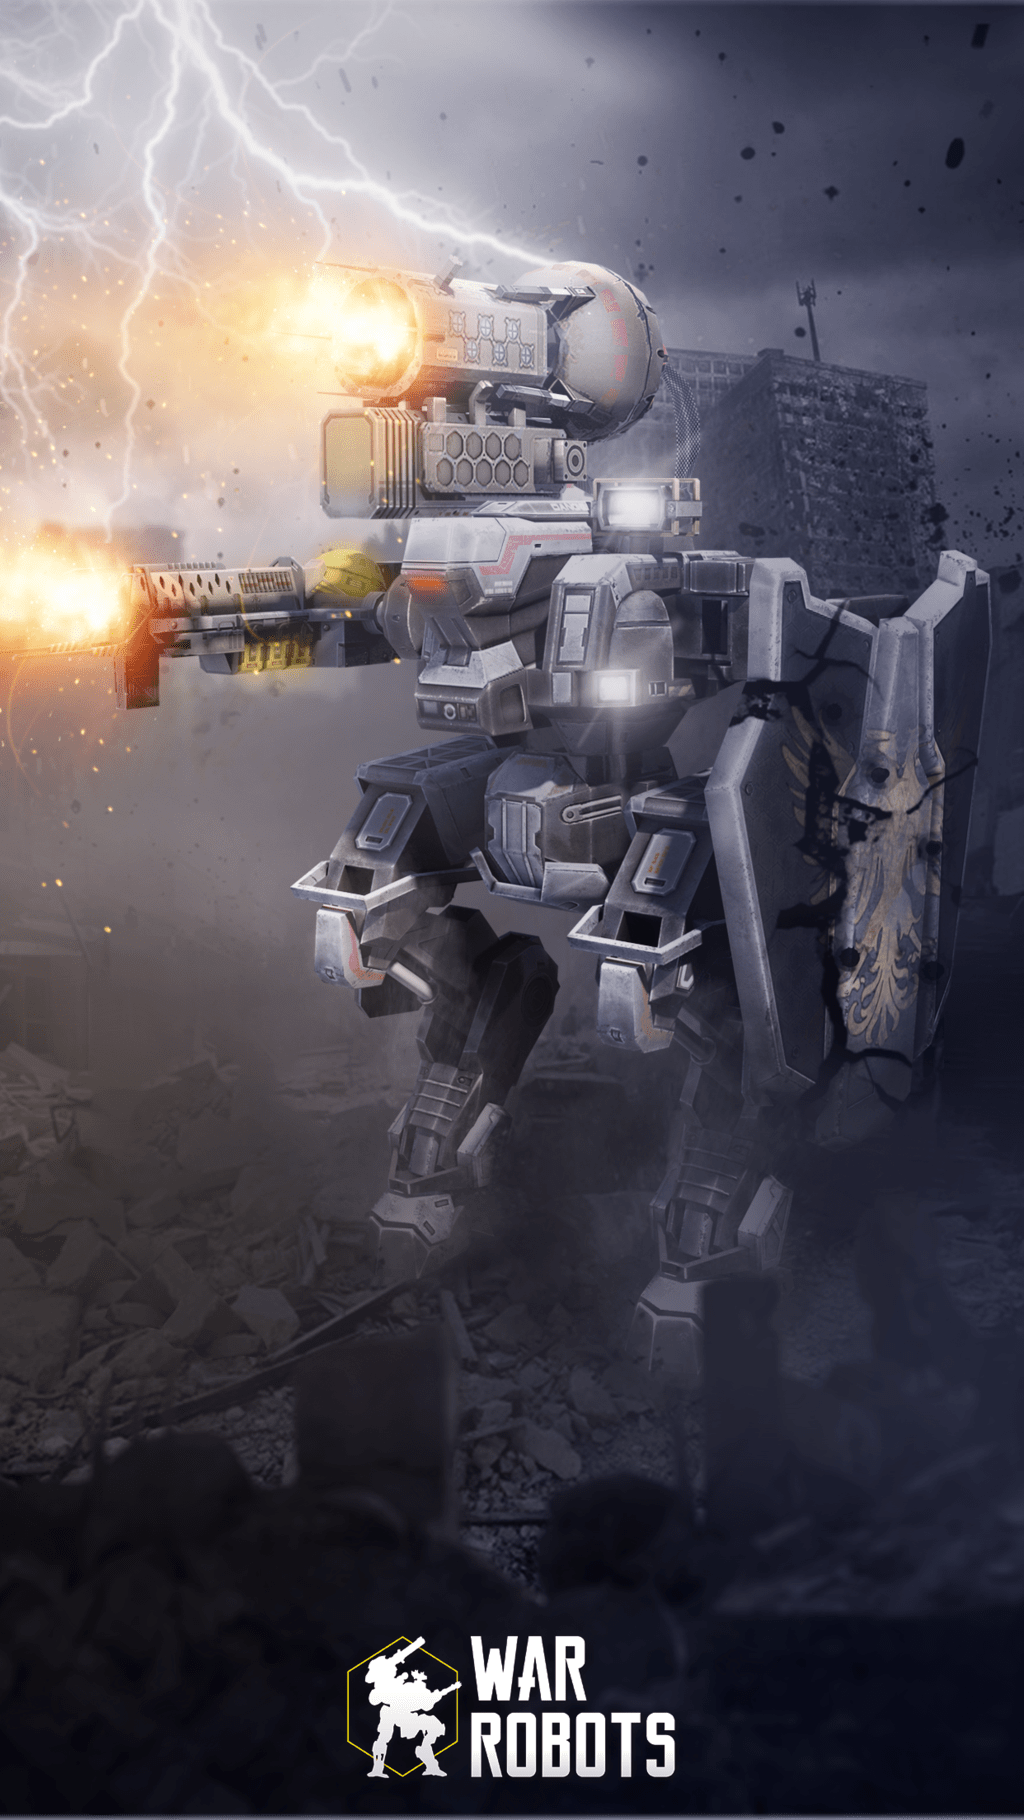 War Robots Wallpaper hd APK for Android Download